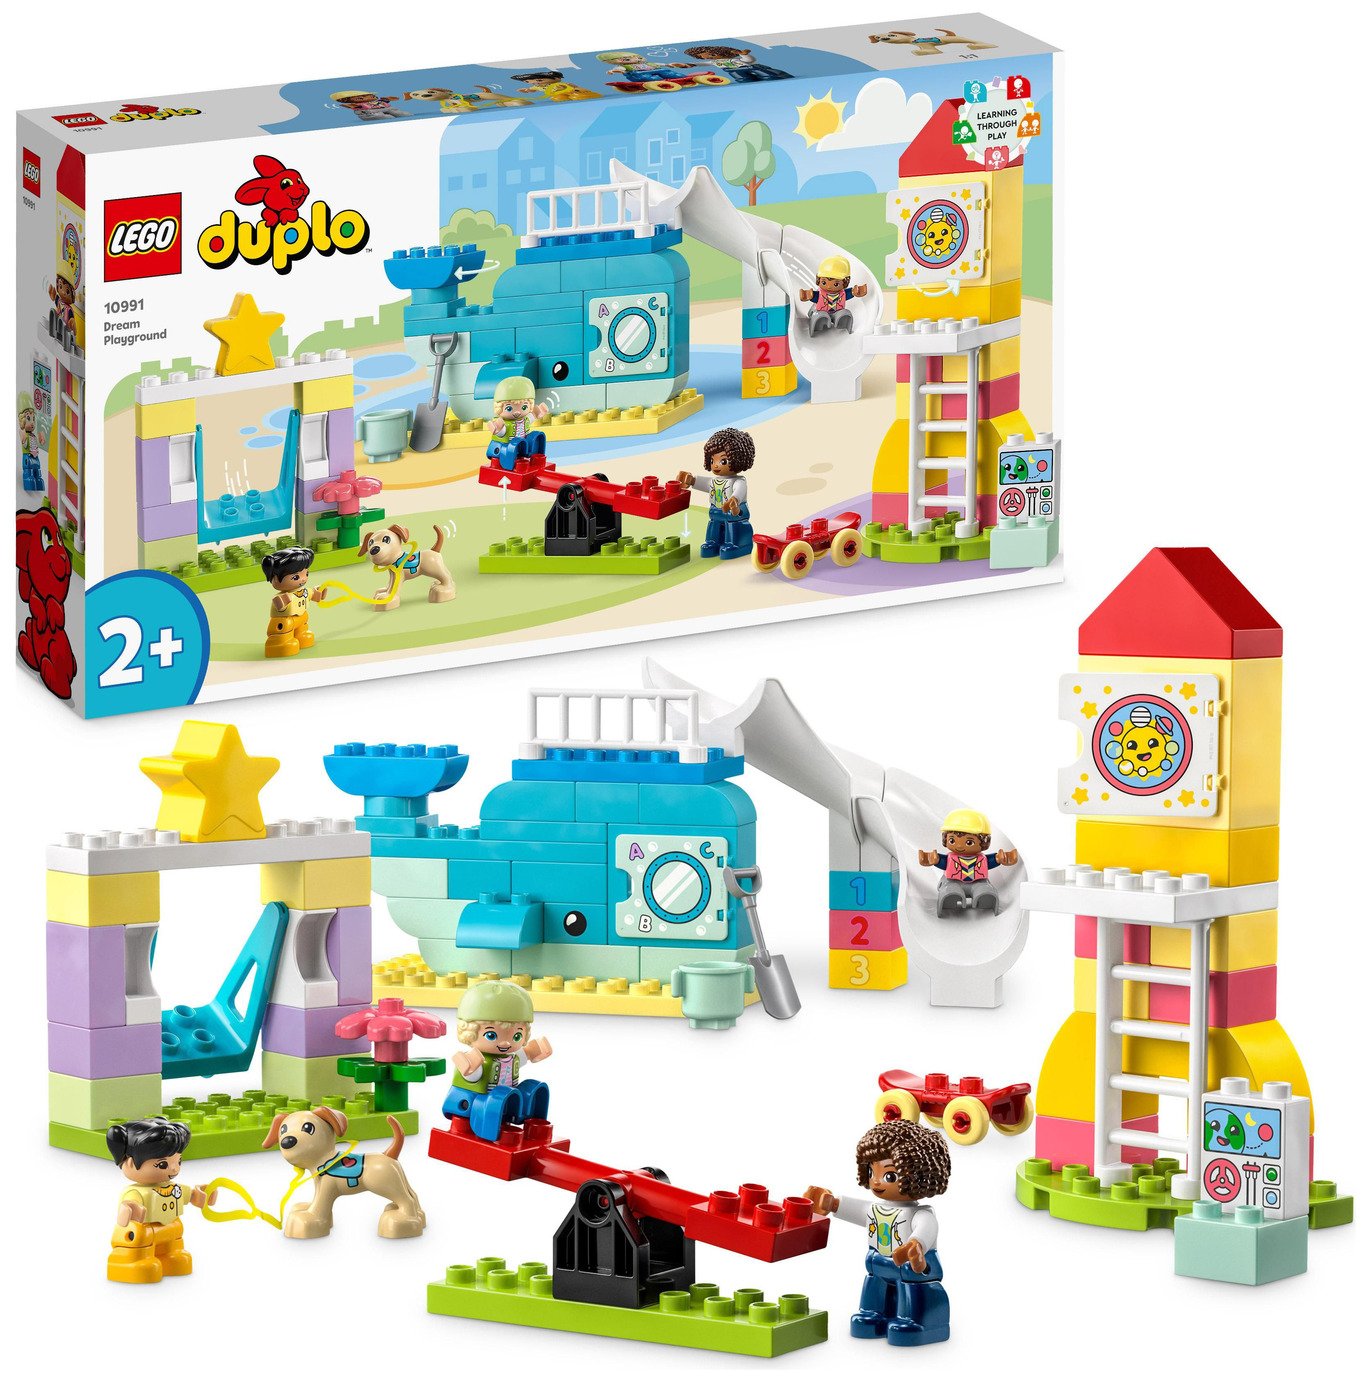 LEGO DUPLO Dream Playground Building Bricks Toy Set 10991